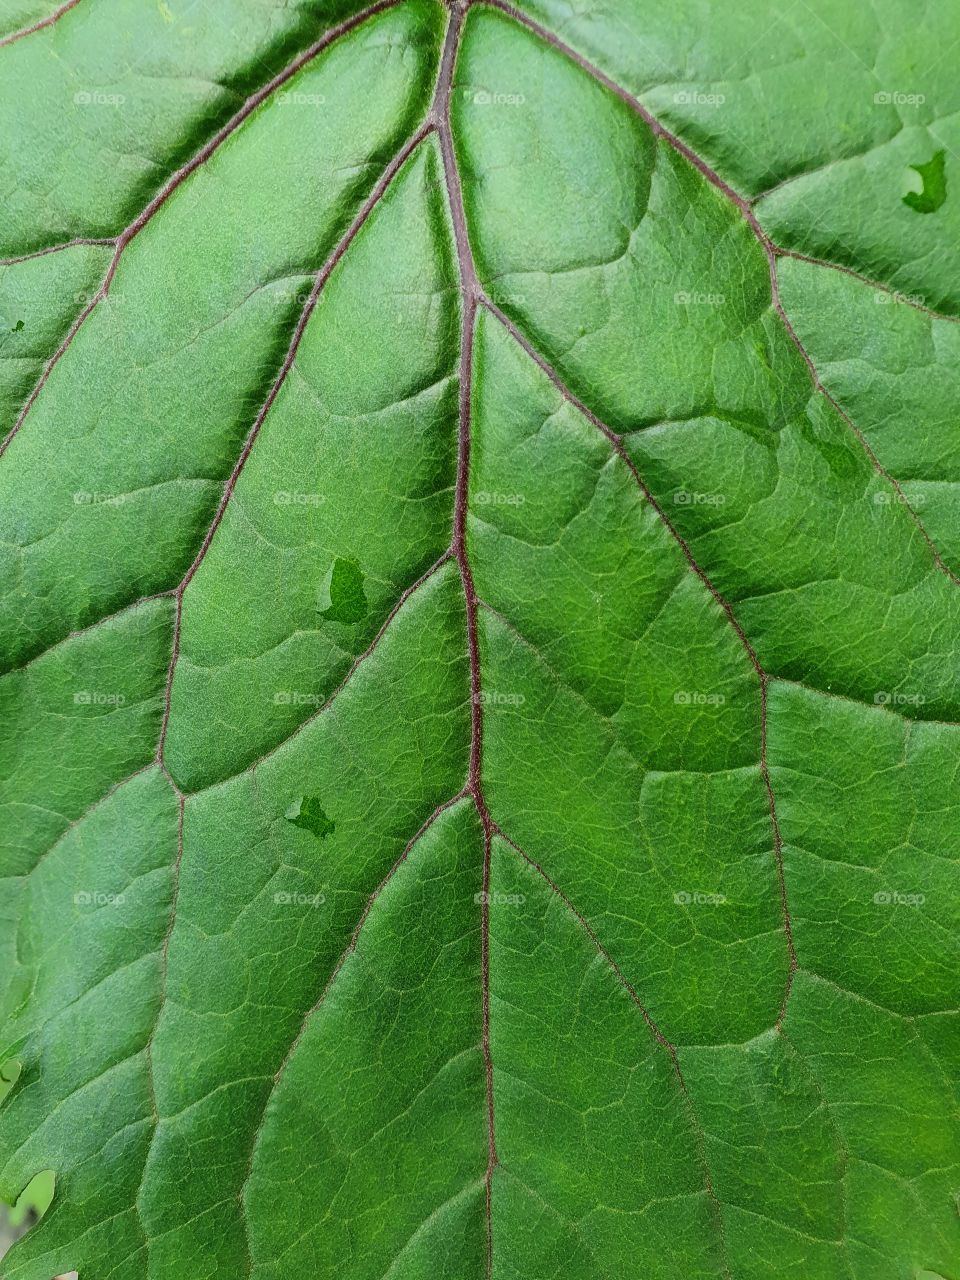 red streaks on a green leaf